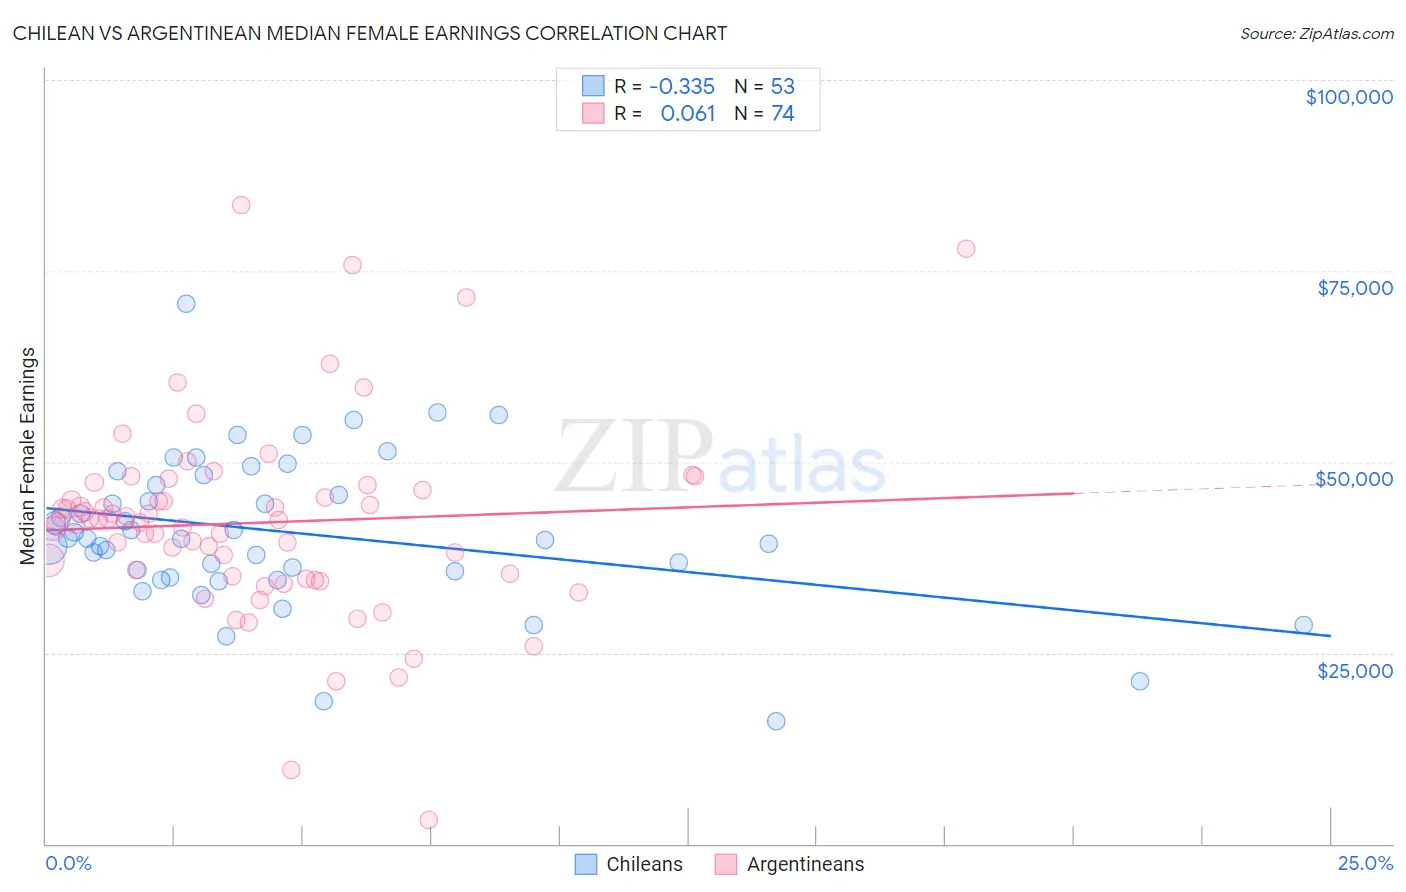 Chilean vs Argentinean Median Female Earnings